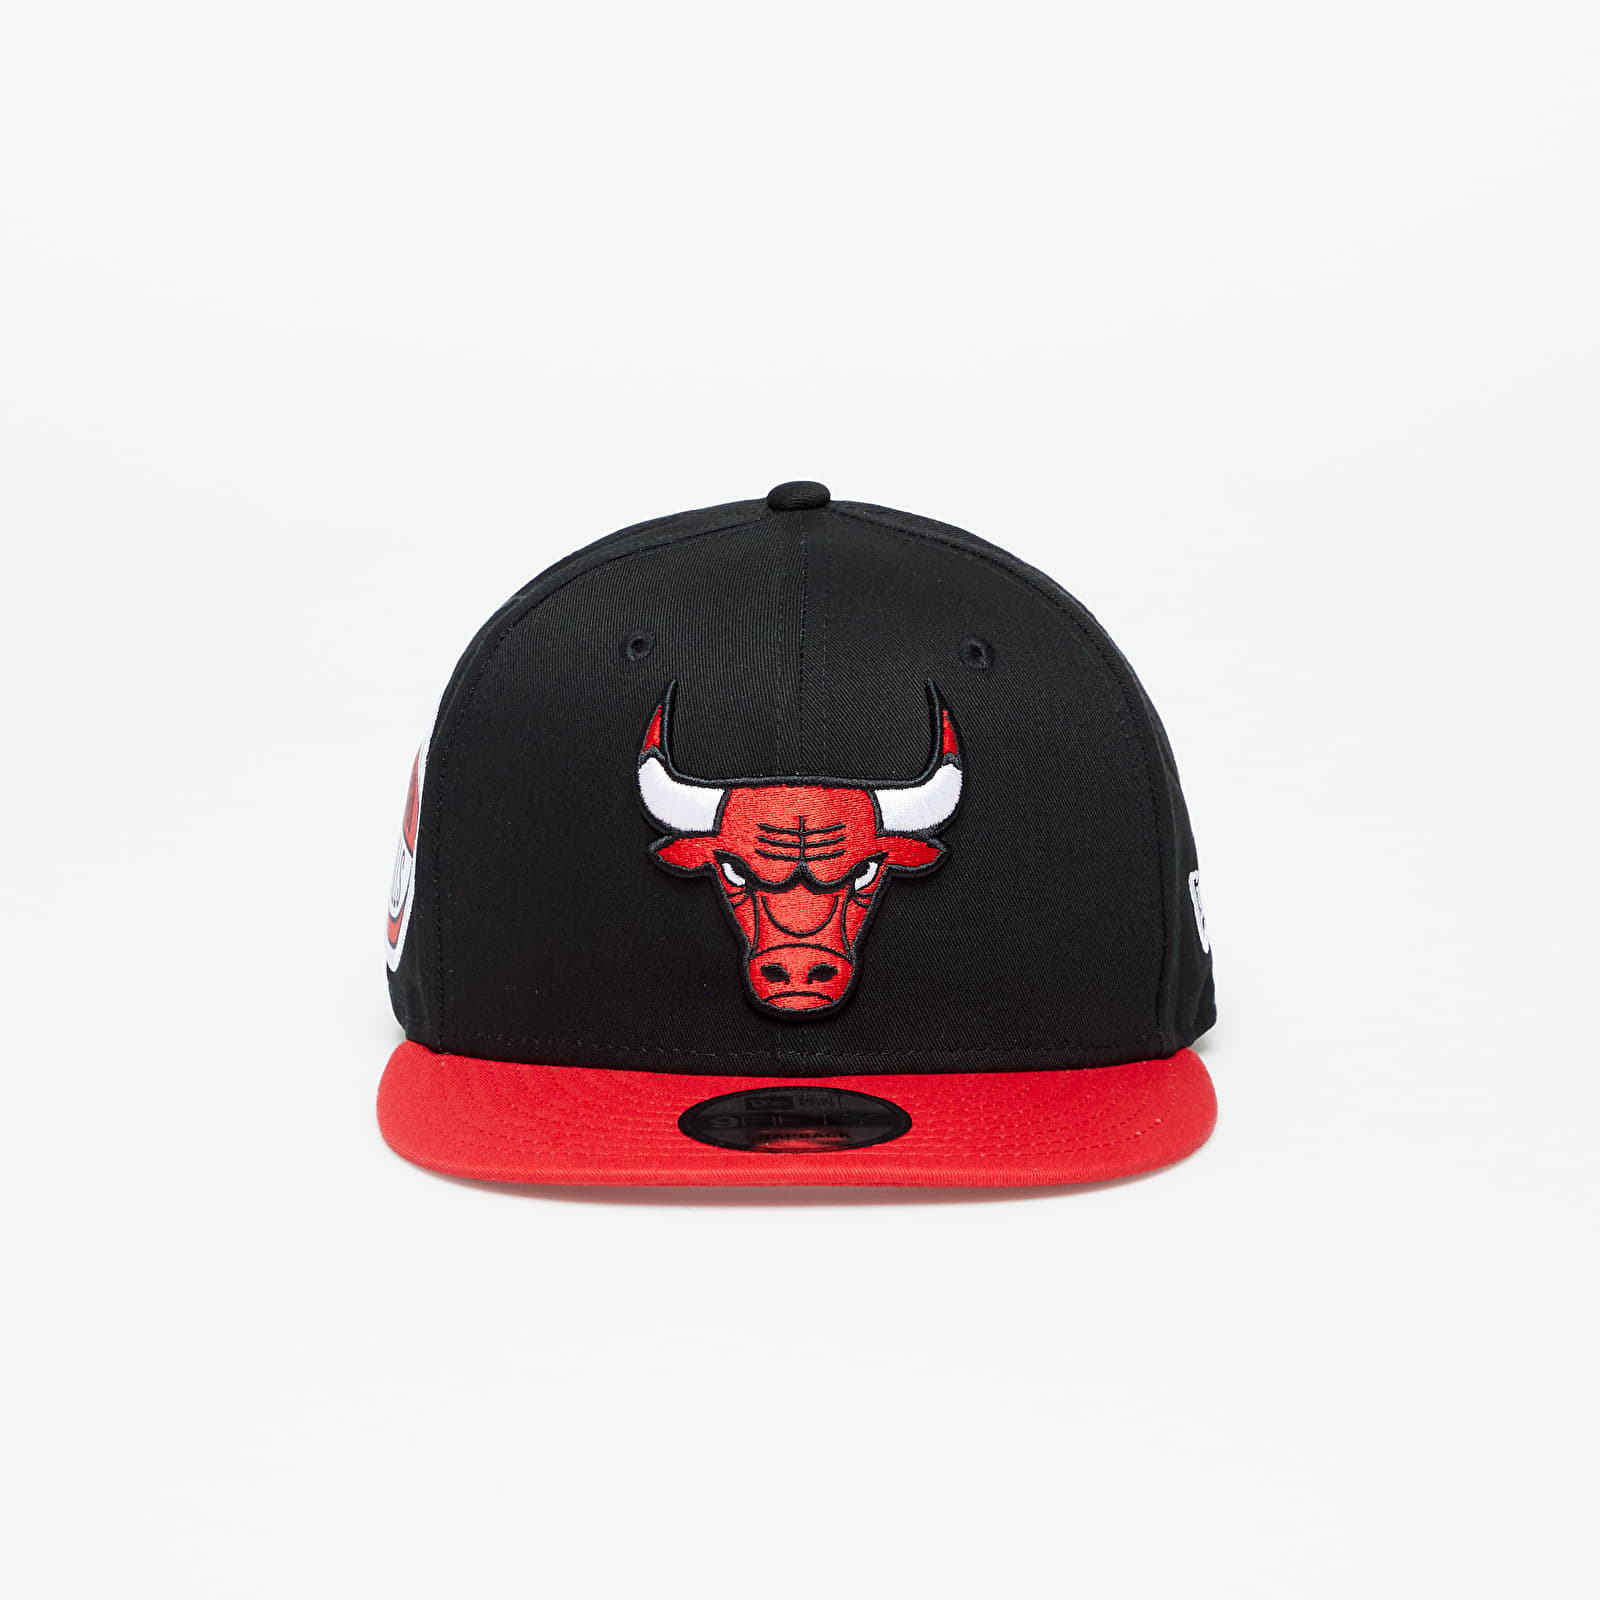 New Era - chicago bulls team side patch 9fifty snapback cap black/ front door red